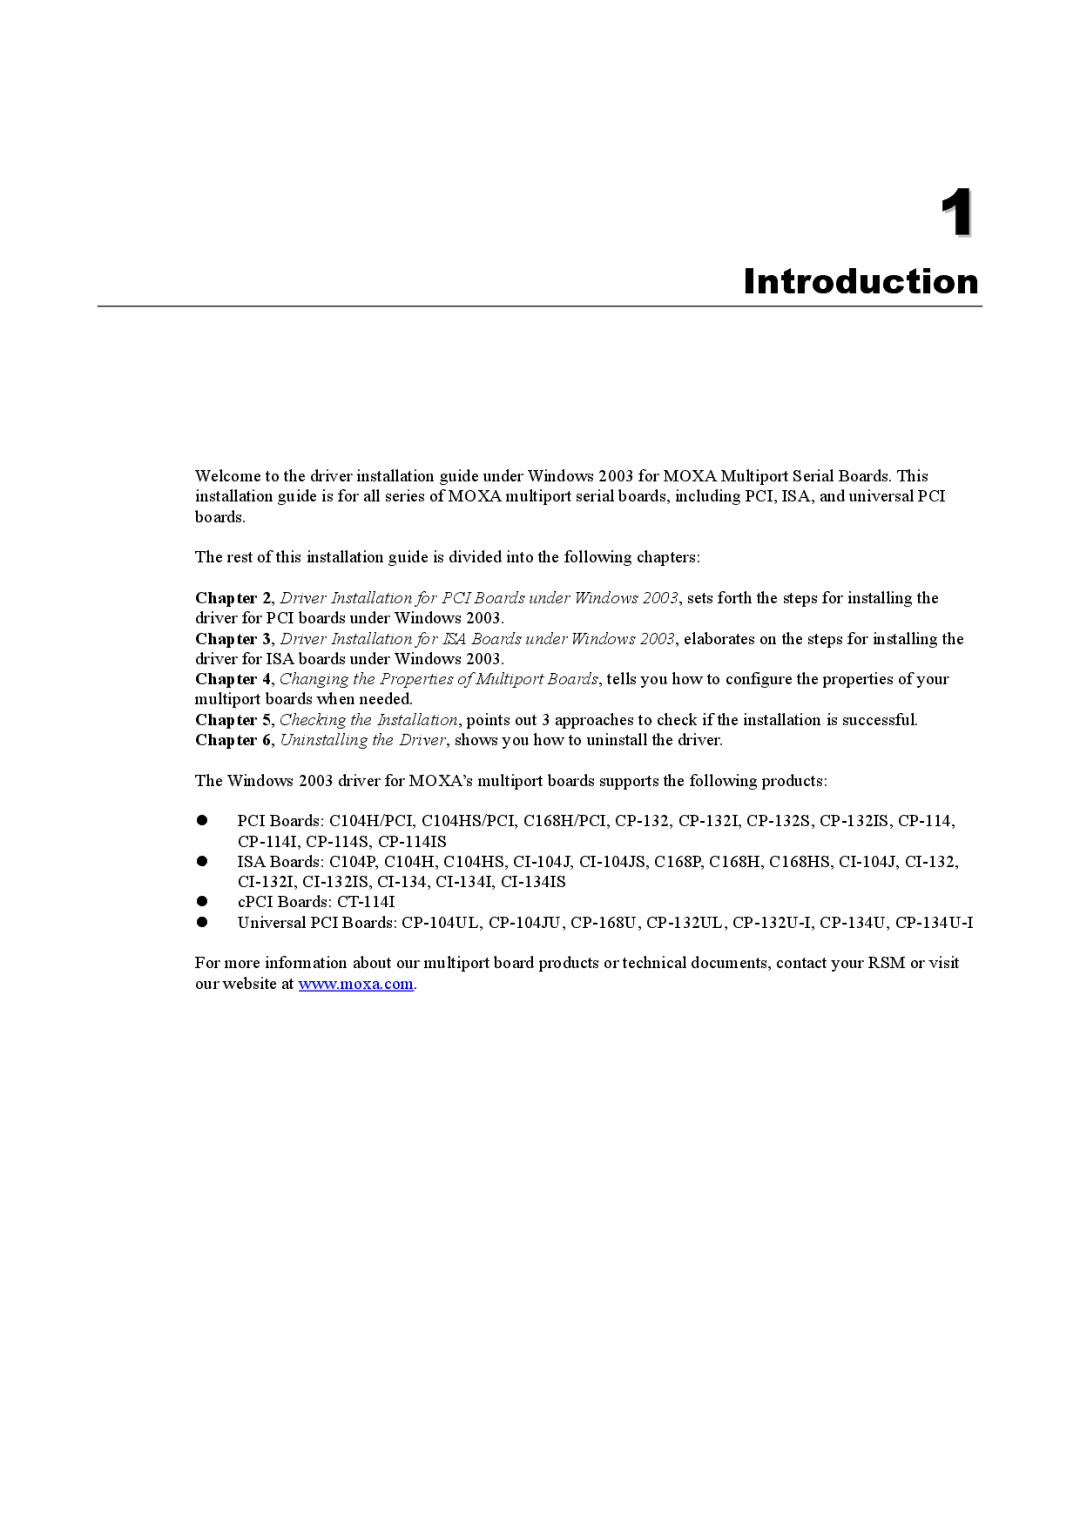 Moxa Technologies Windows 2003 Driver manual Introduction 